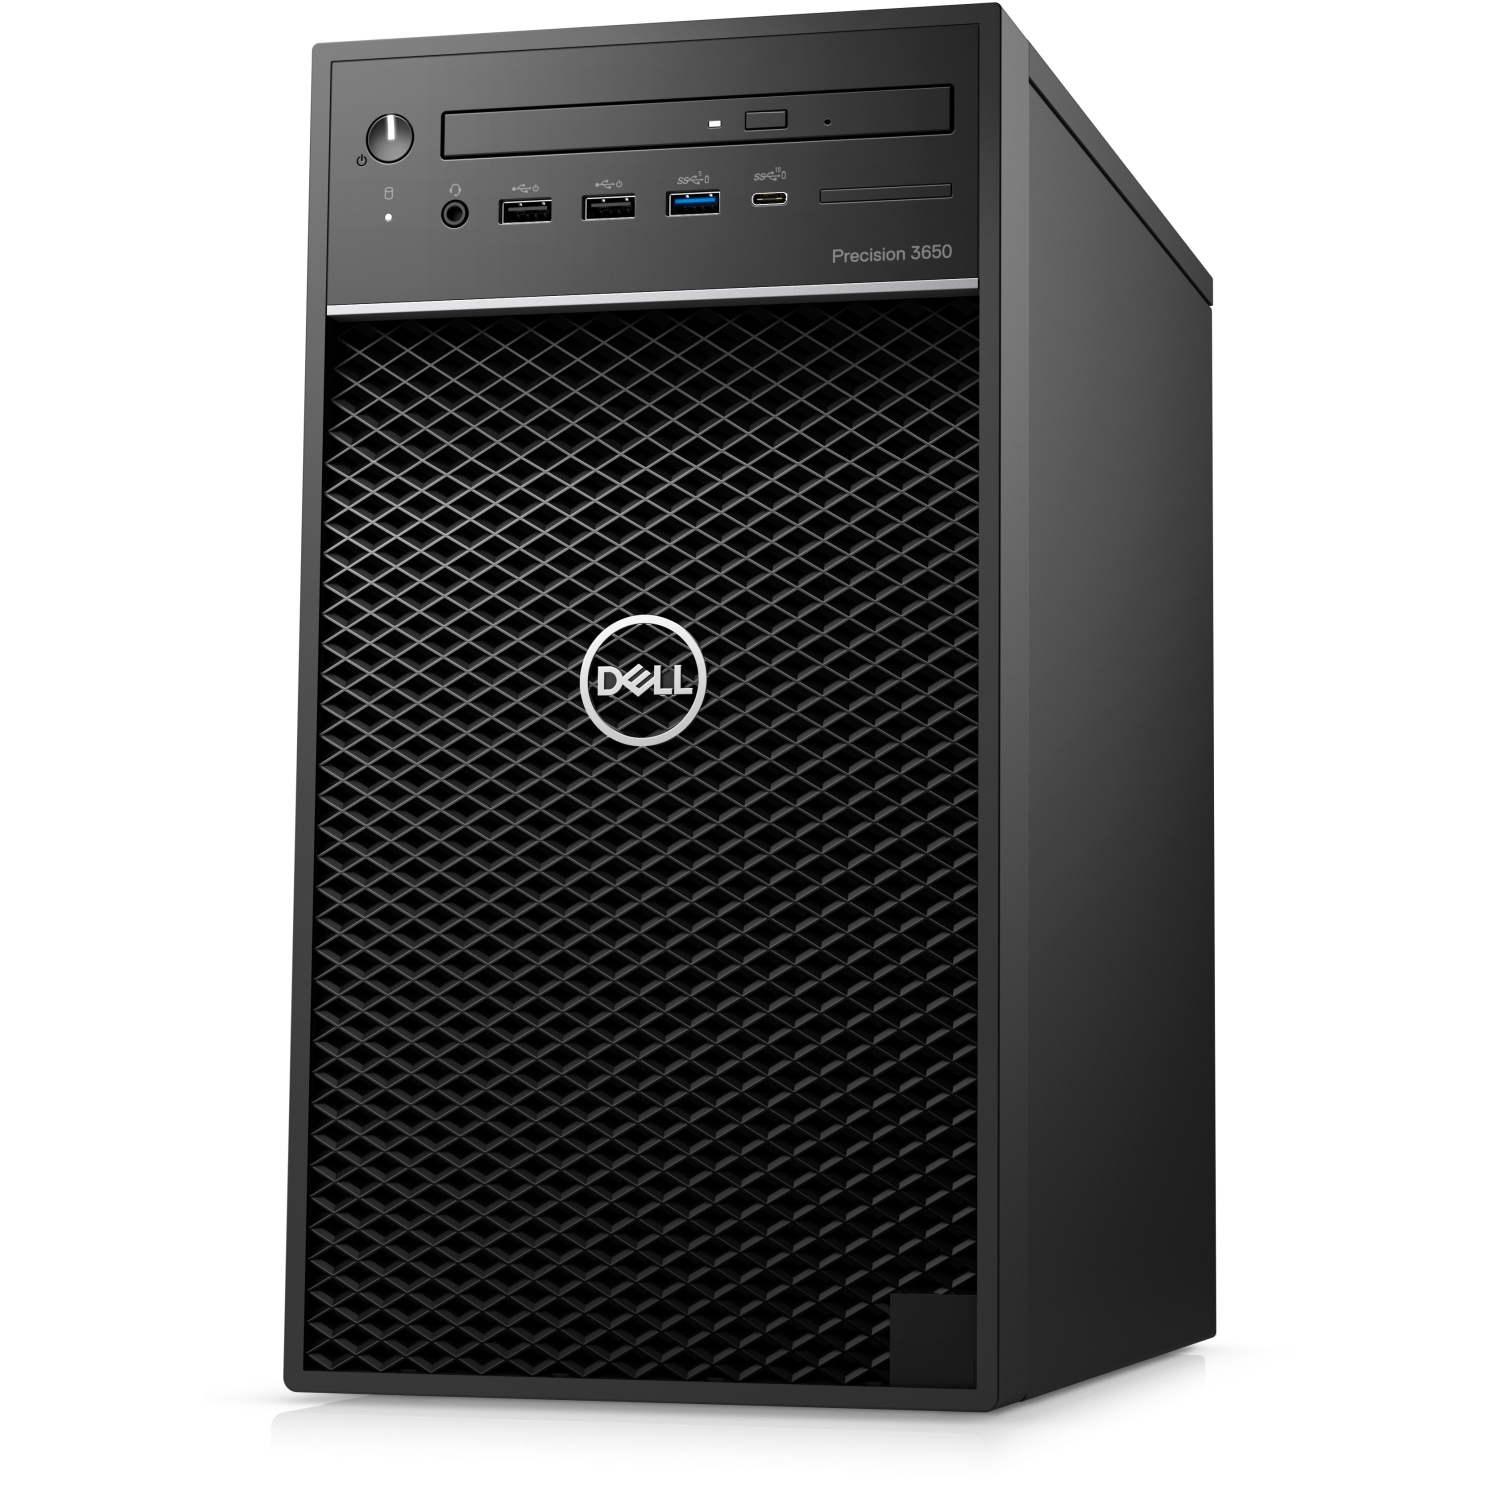 Refurbished (Excellent) - Dell Precision T3650 Workstation Desktop (2021), Core i9, 512GB SSD, 32GB RAM, Quadro 4000, 8 Cores @ 5.3 GHz, 11th Gen CPU Certified